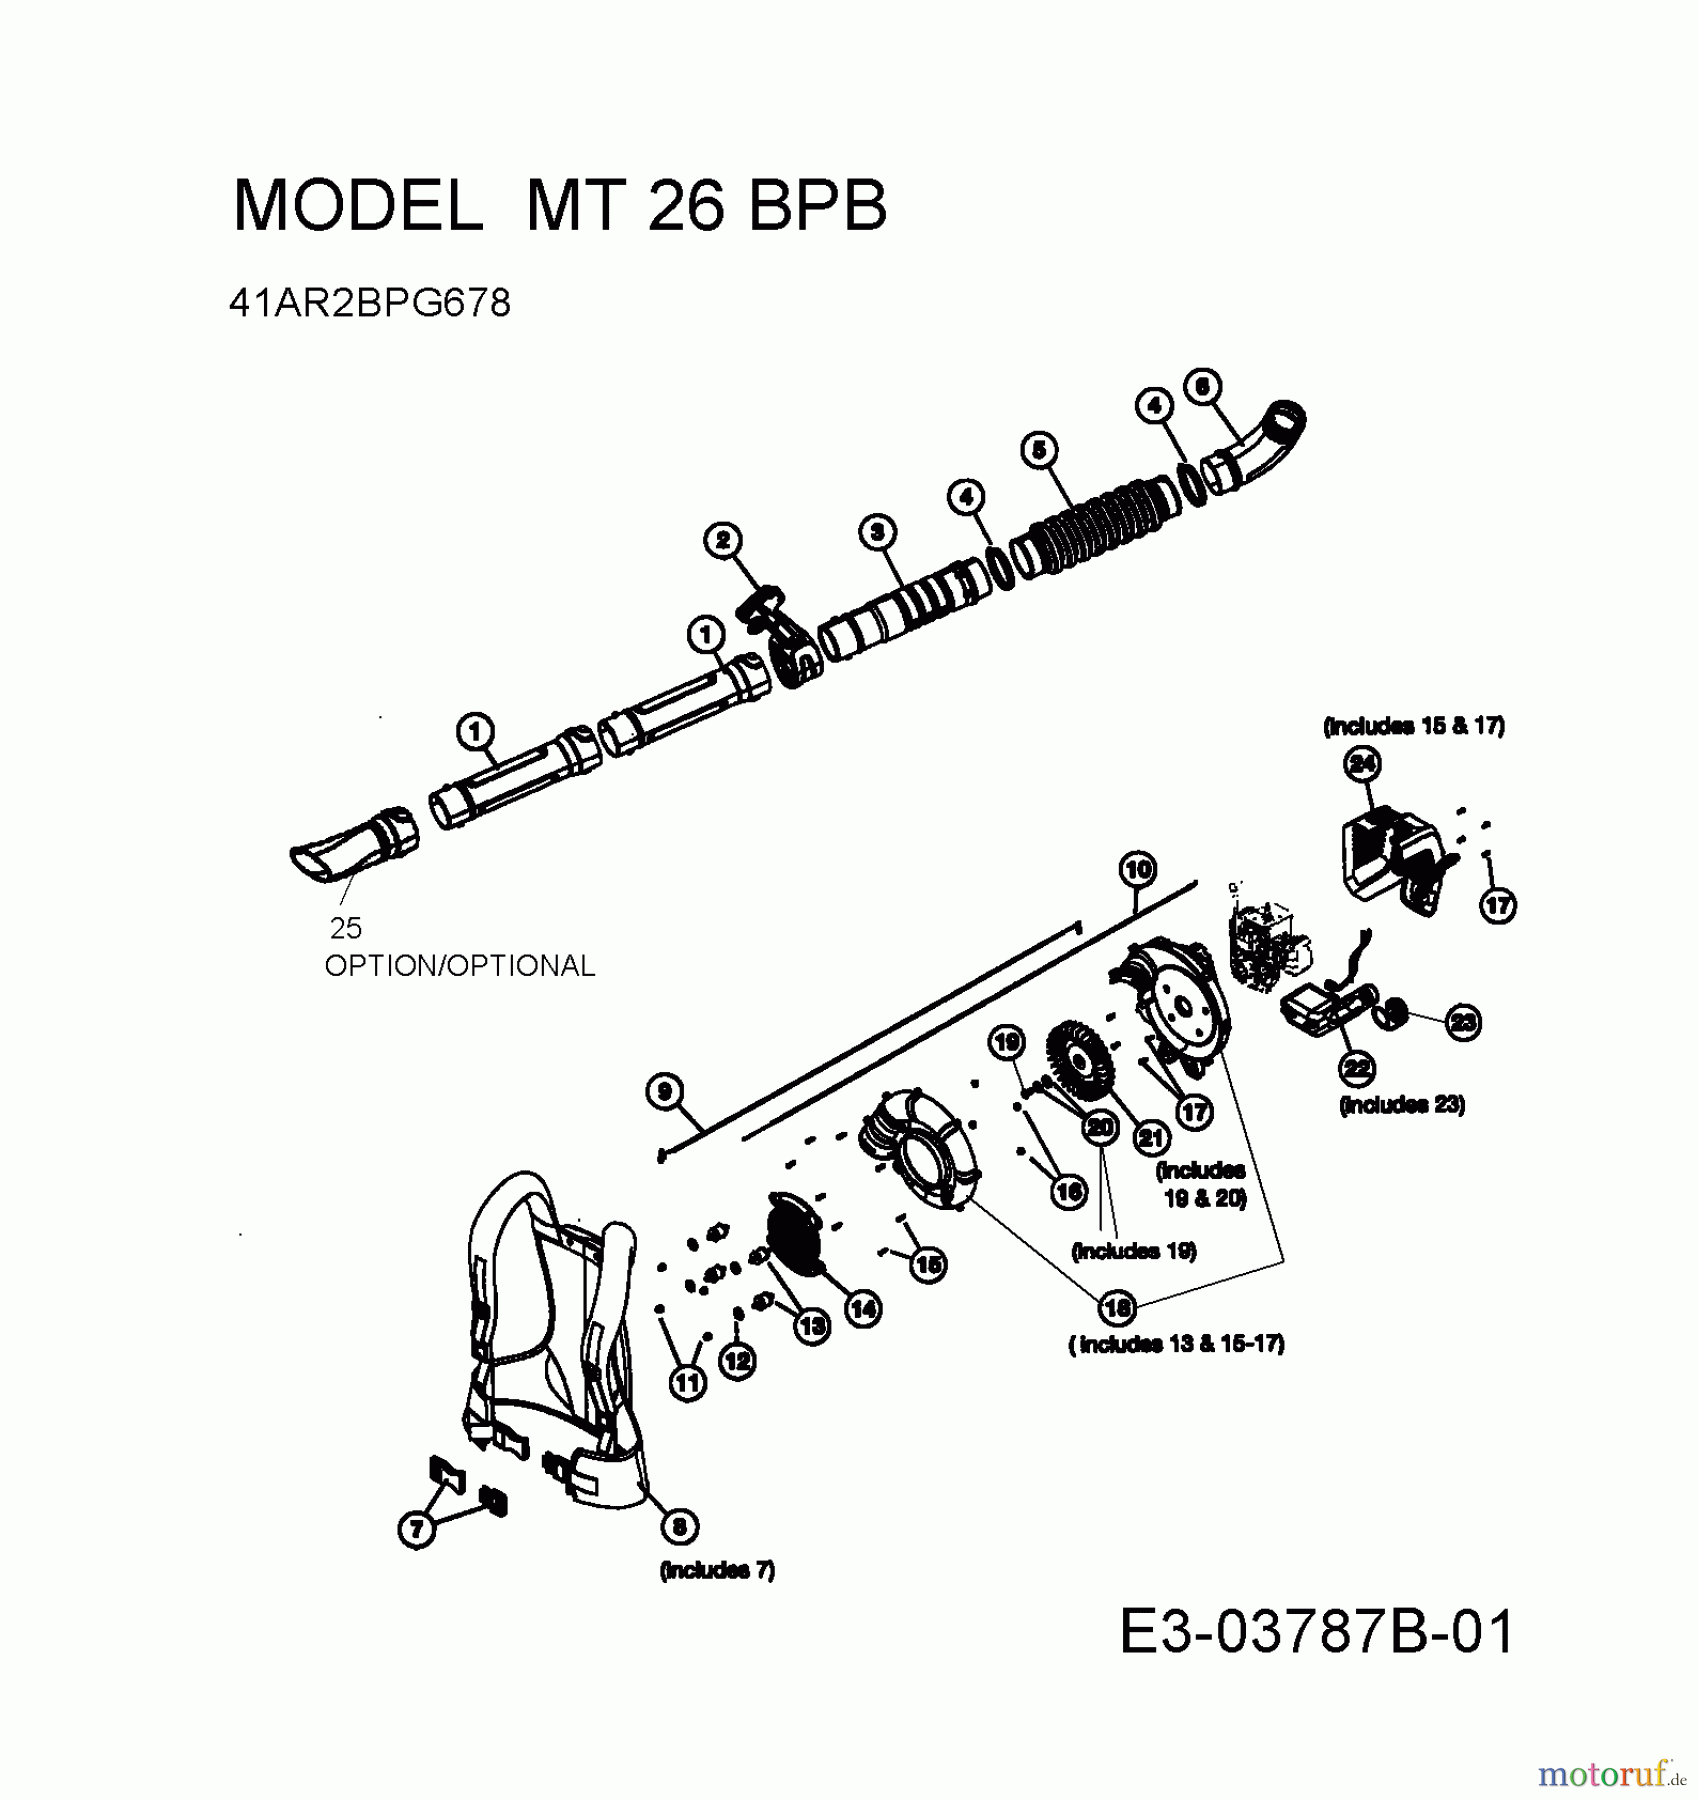  MTD Leaf blower, Blower vac MT 26 BPB 41AR2BPG678  (2009) Basic machine